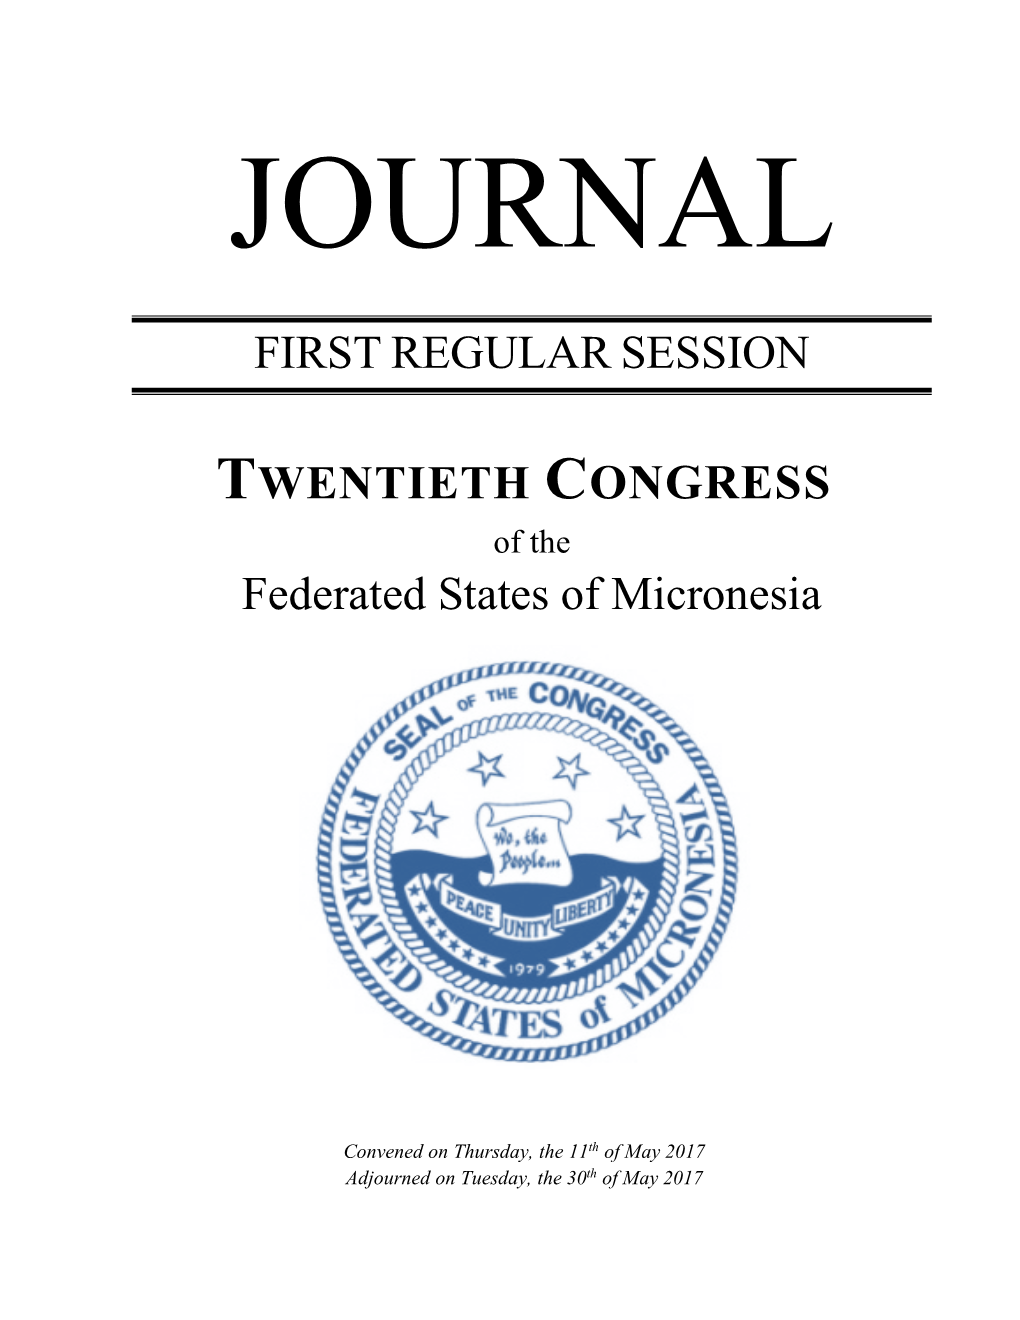 First Regular Session Twentieth Congress